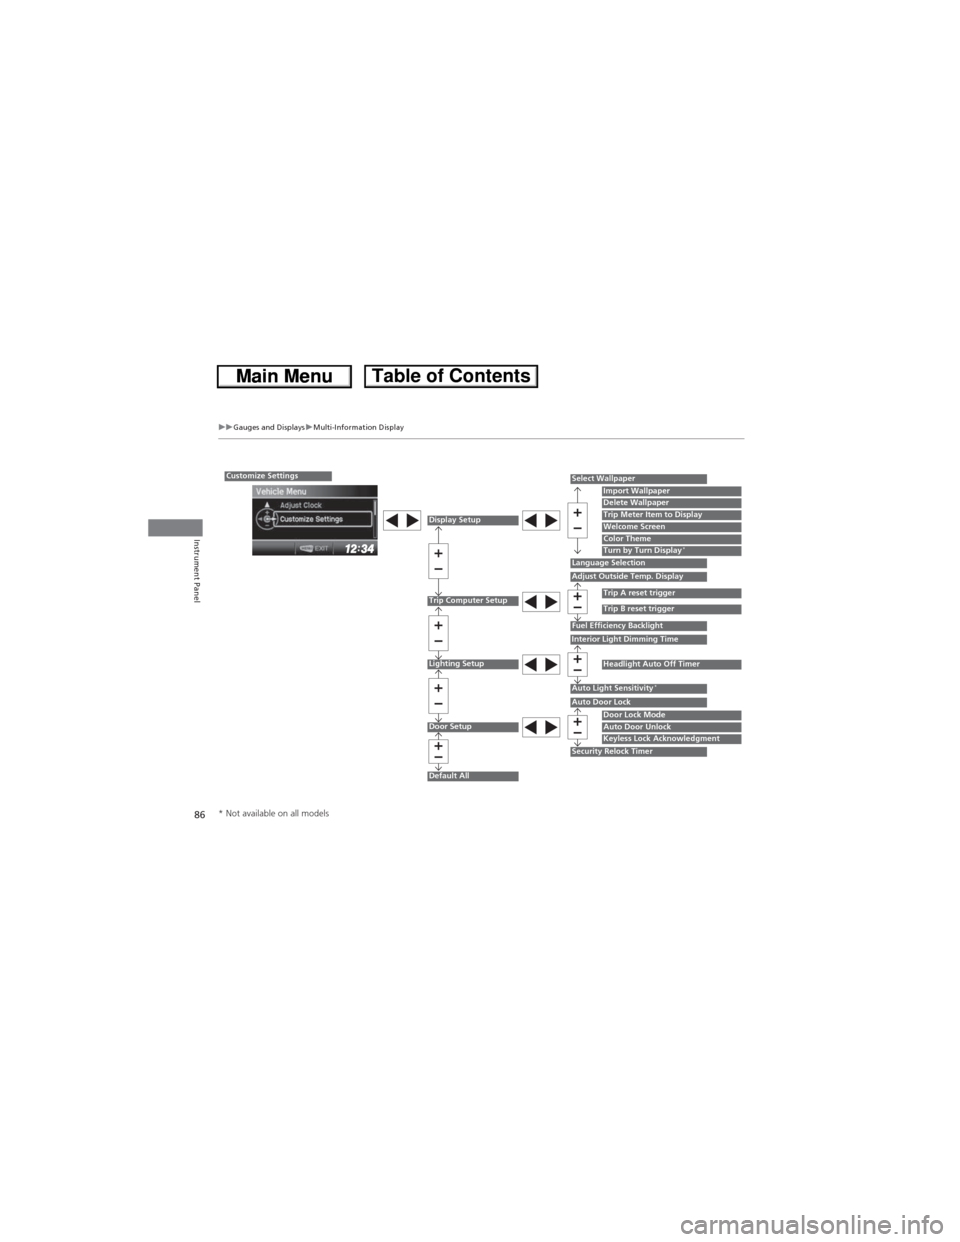 HONDA CR-V 2013 RM1, RM3, RM4 / 4.G Owners Manual 86
uuGauges and DisplaysuMulti-Information Display
Instrument Panel
Customize Settings
Display Setup
Trip Computer Setup
Lighting Setup
Door Setup
Default All
Select Wallpaper
Language SelectionAdjust